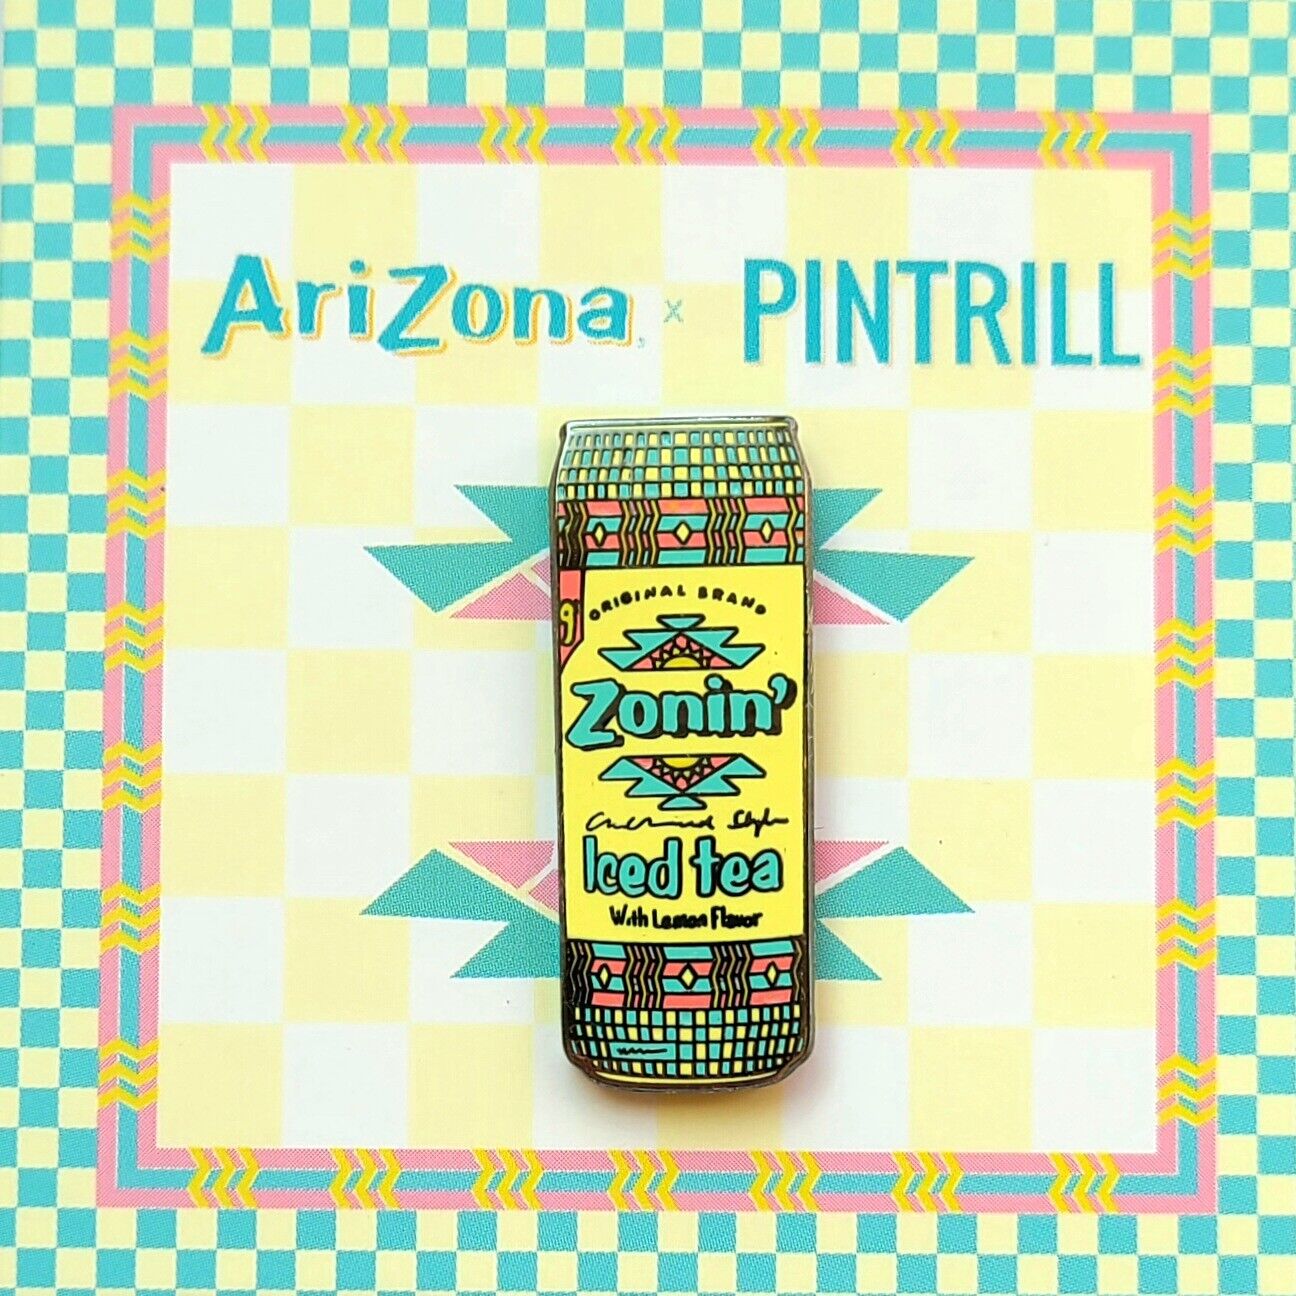 ⚡RARE⚡ PINTRILL x ARIZONA 2018 Arizona Tea Pins *BRAND NEW* LIMITED EDITION